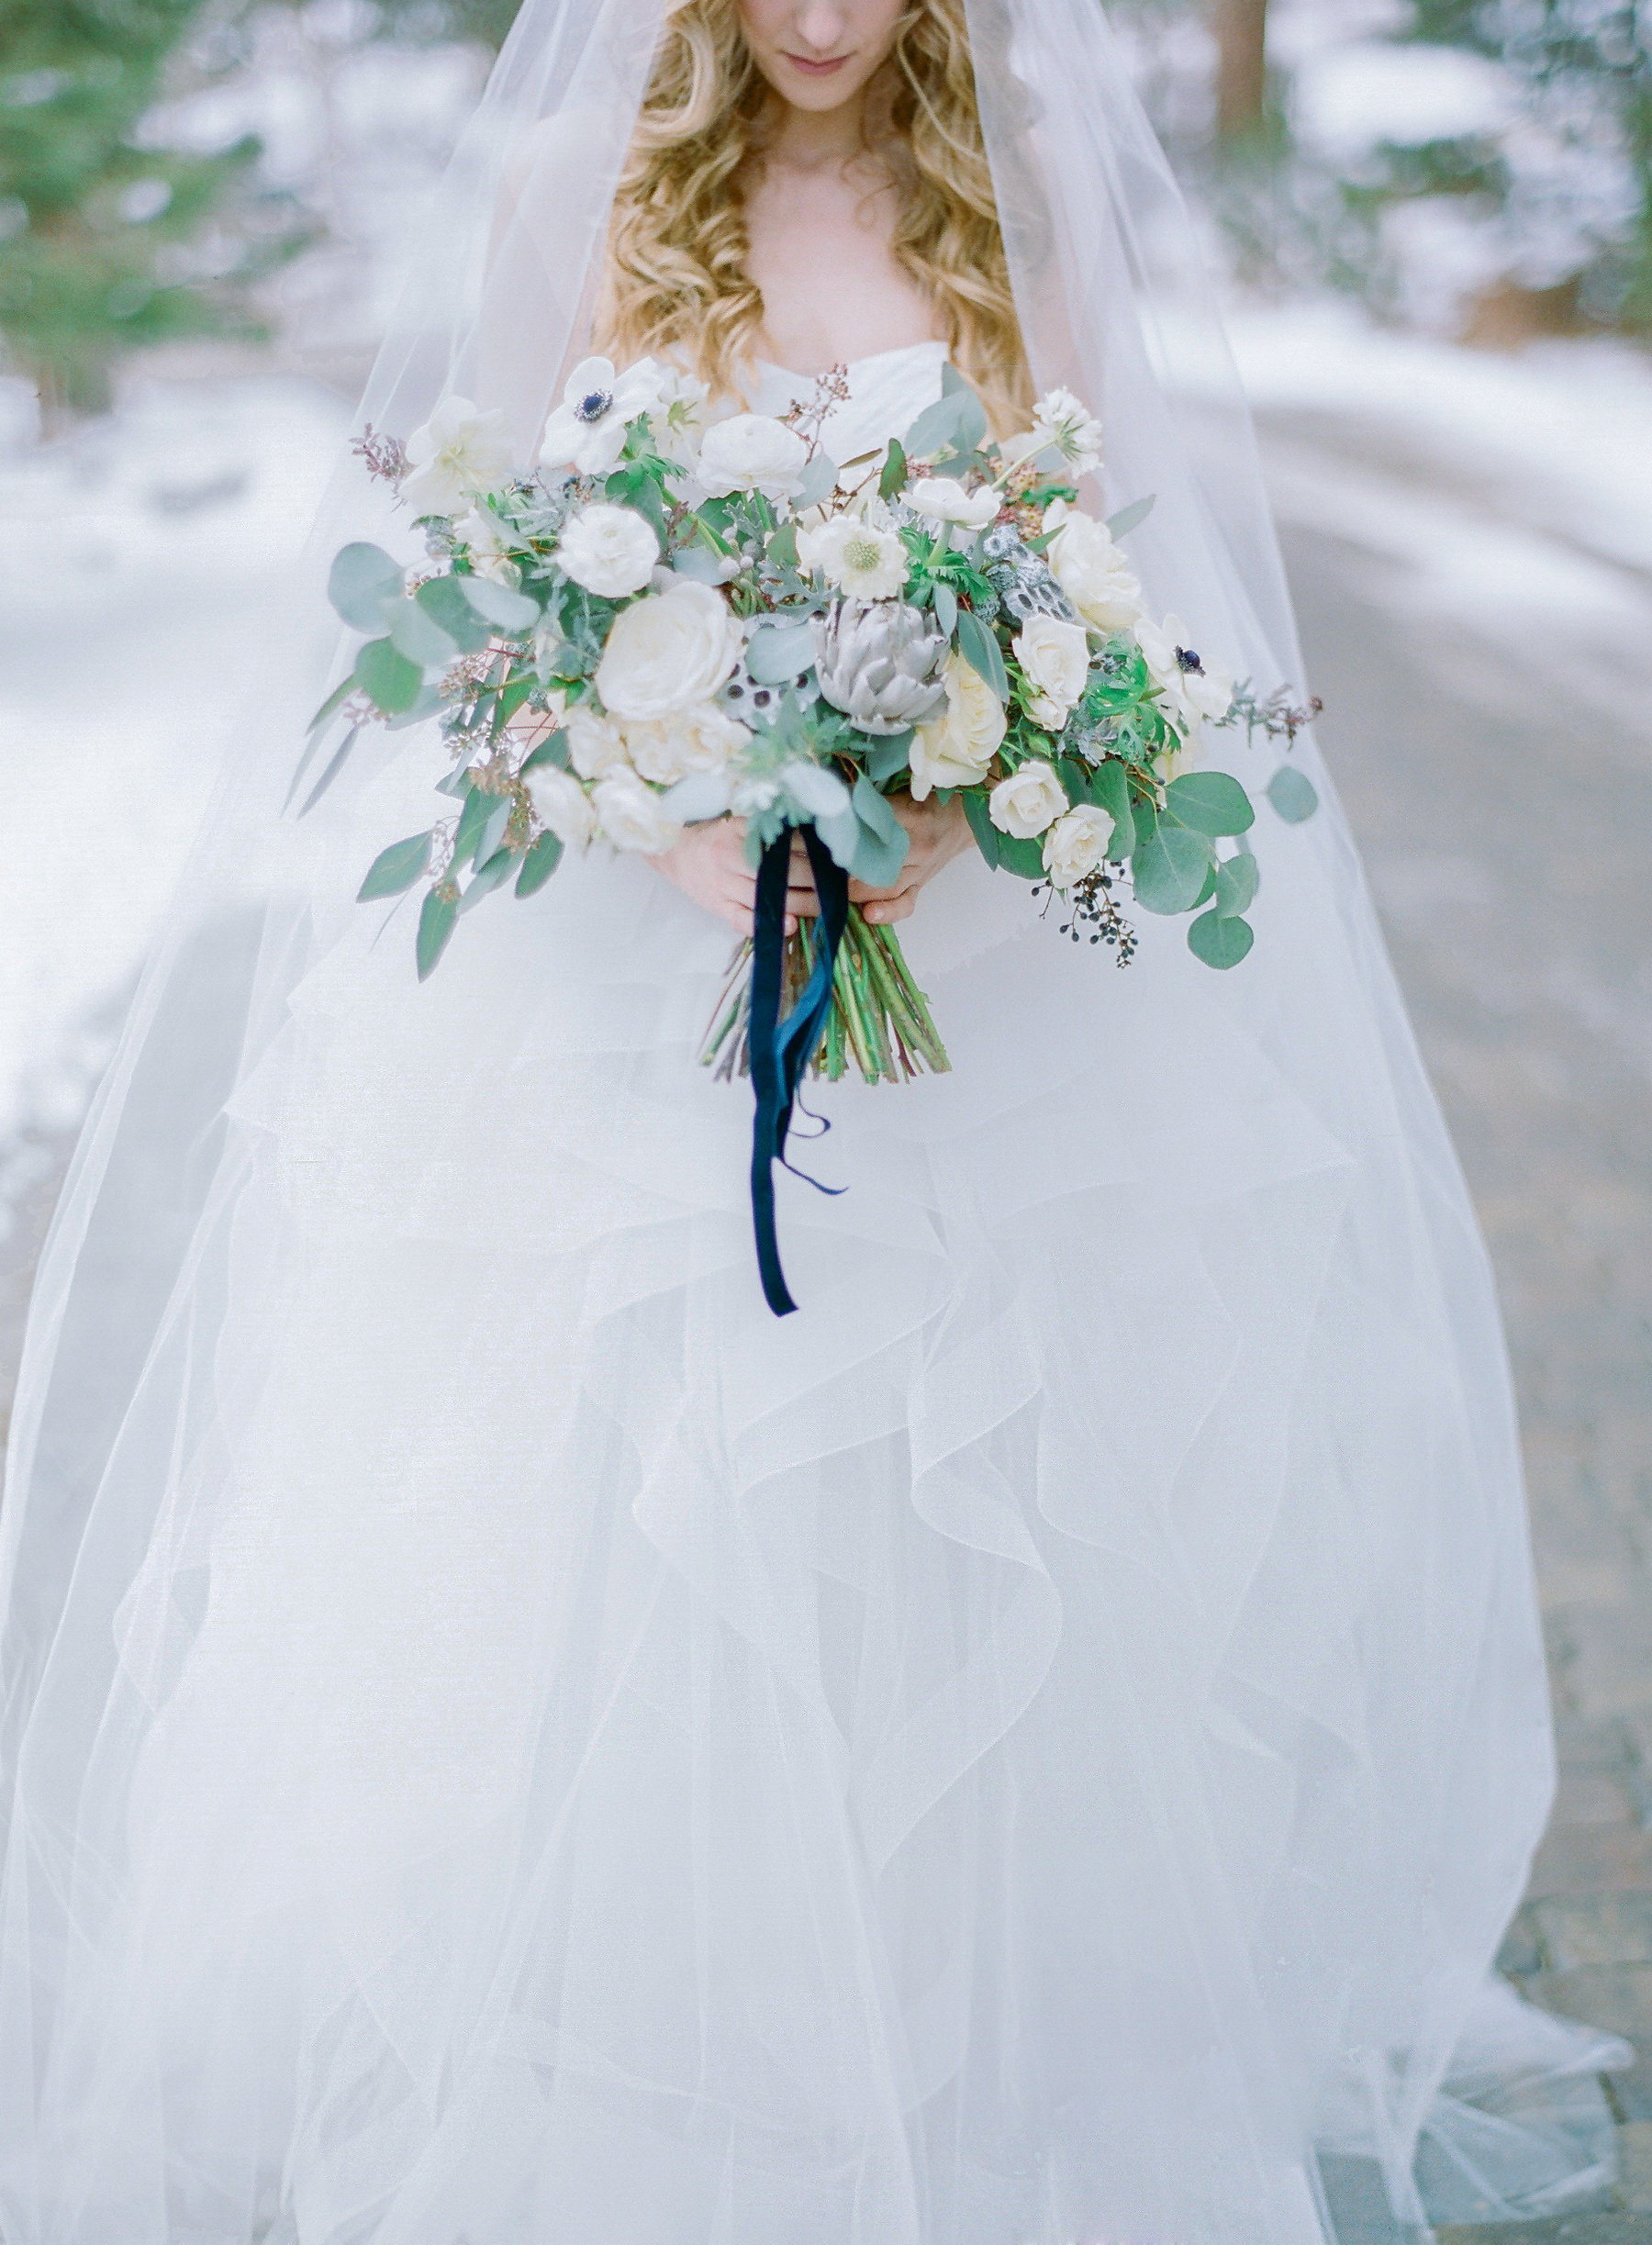  Winter Wedding in Estes Park, Colorado | Della Terra Mountain Chateau | Reem Acra Eliza Wedding Dress | Photography by Shannon Von Eschen 